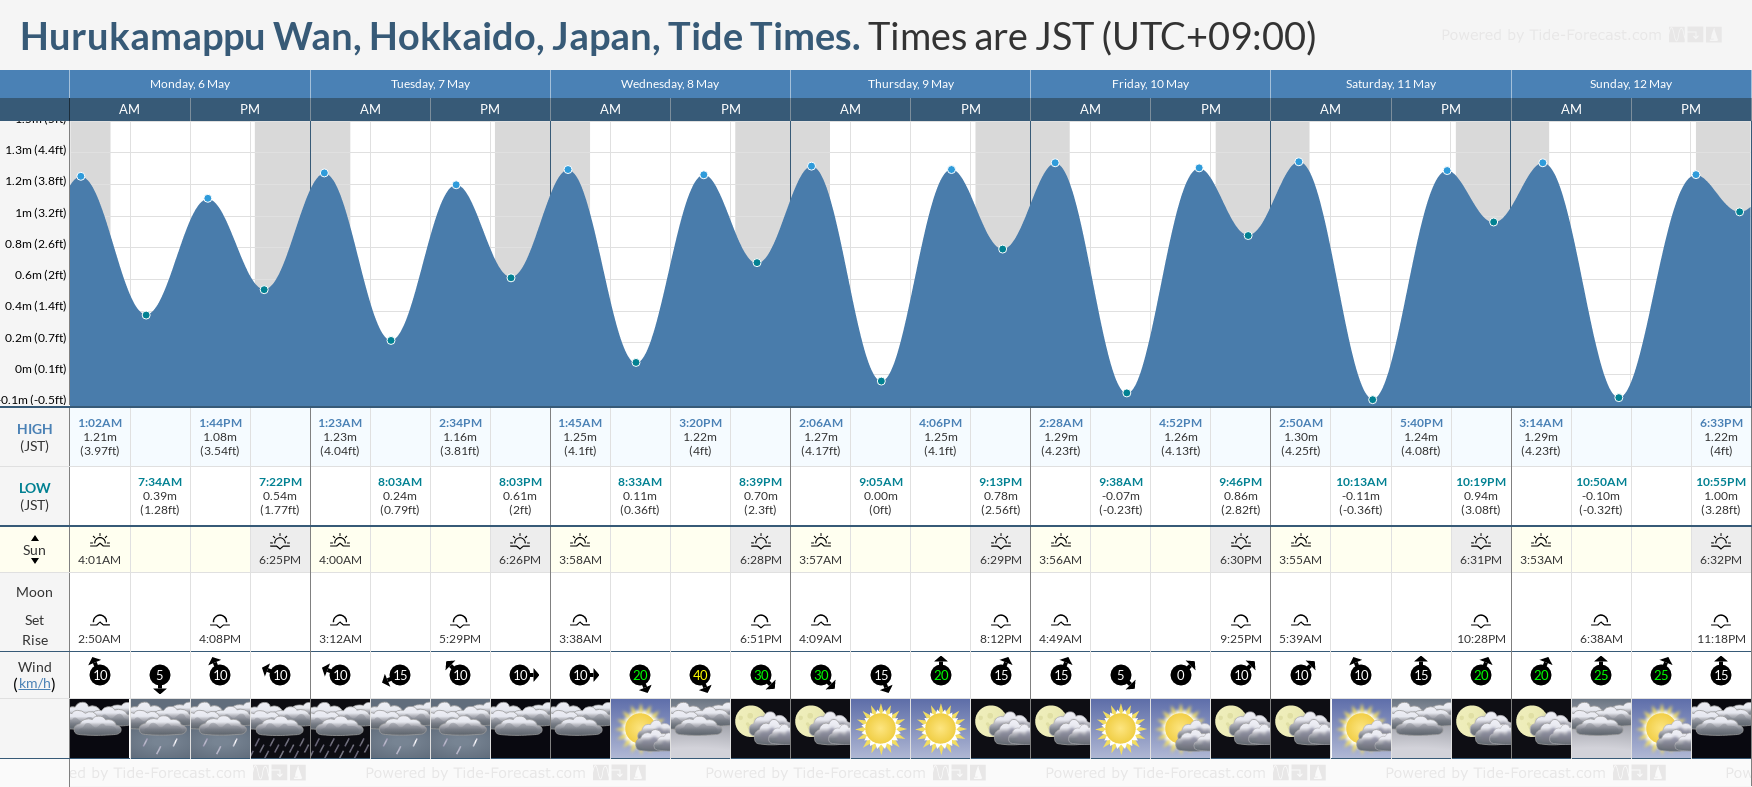 Hurukamappu Wan, Hokkaido, Japan Tide Chart including high and low tide times for the next 7 days